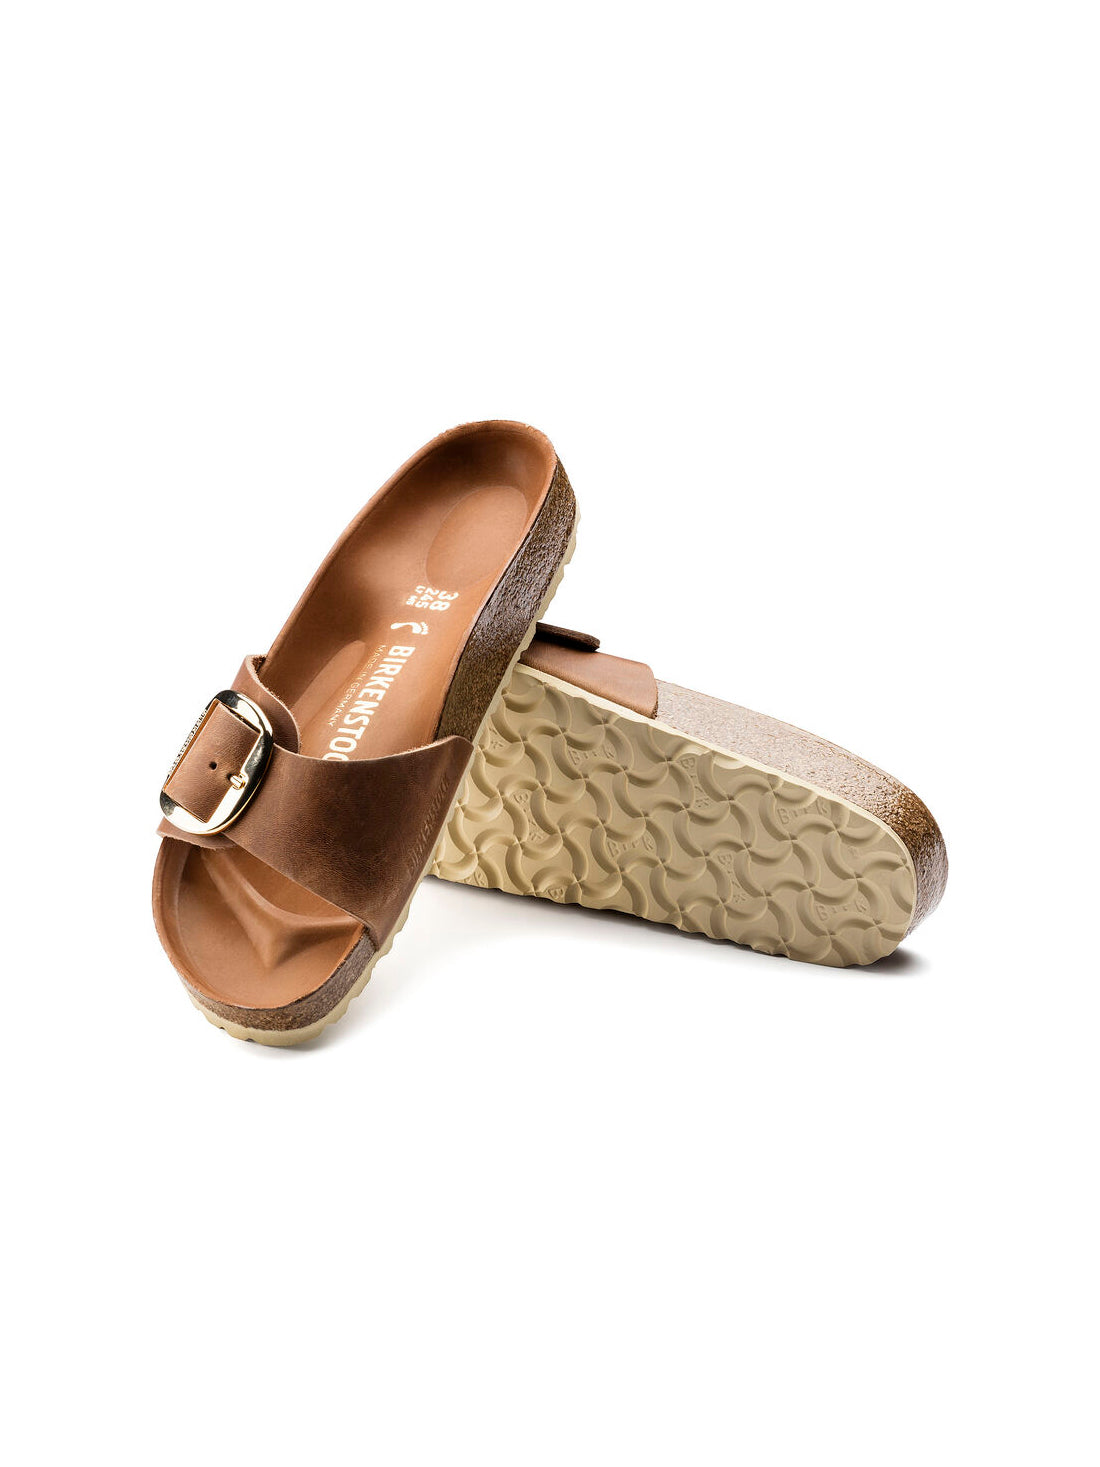 birkenstock madrid big buckle sandal in cognac oiled leather narrow